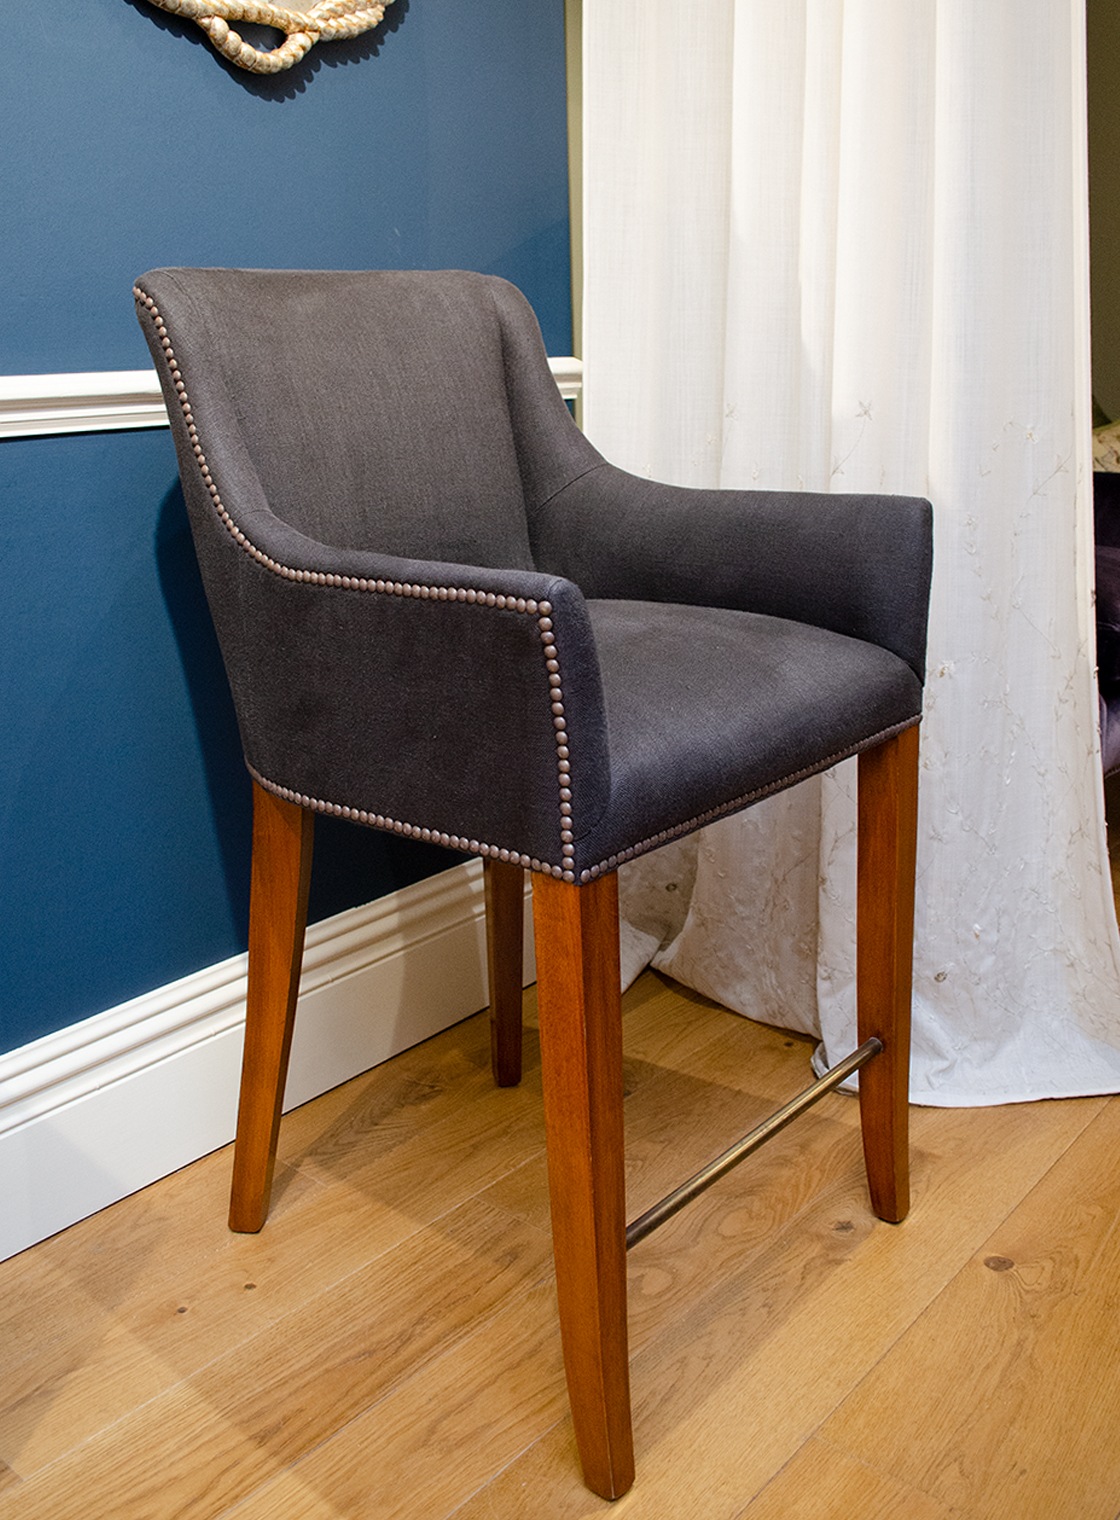 Kingsley bar stool in Bantry linen - Espresso - Beaumont & Fletcher